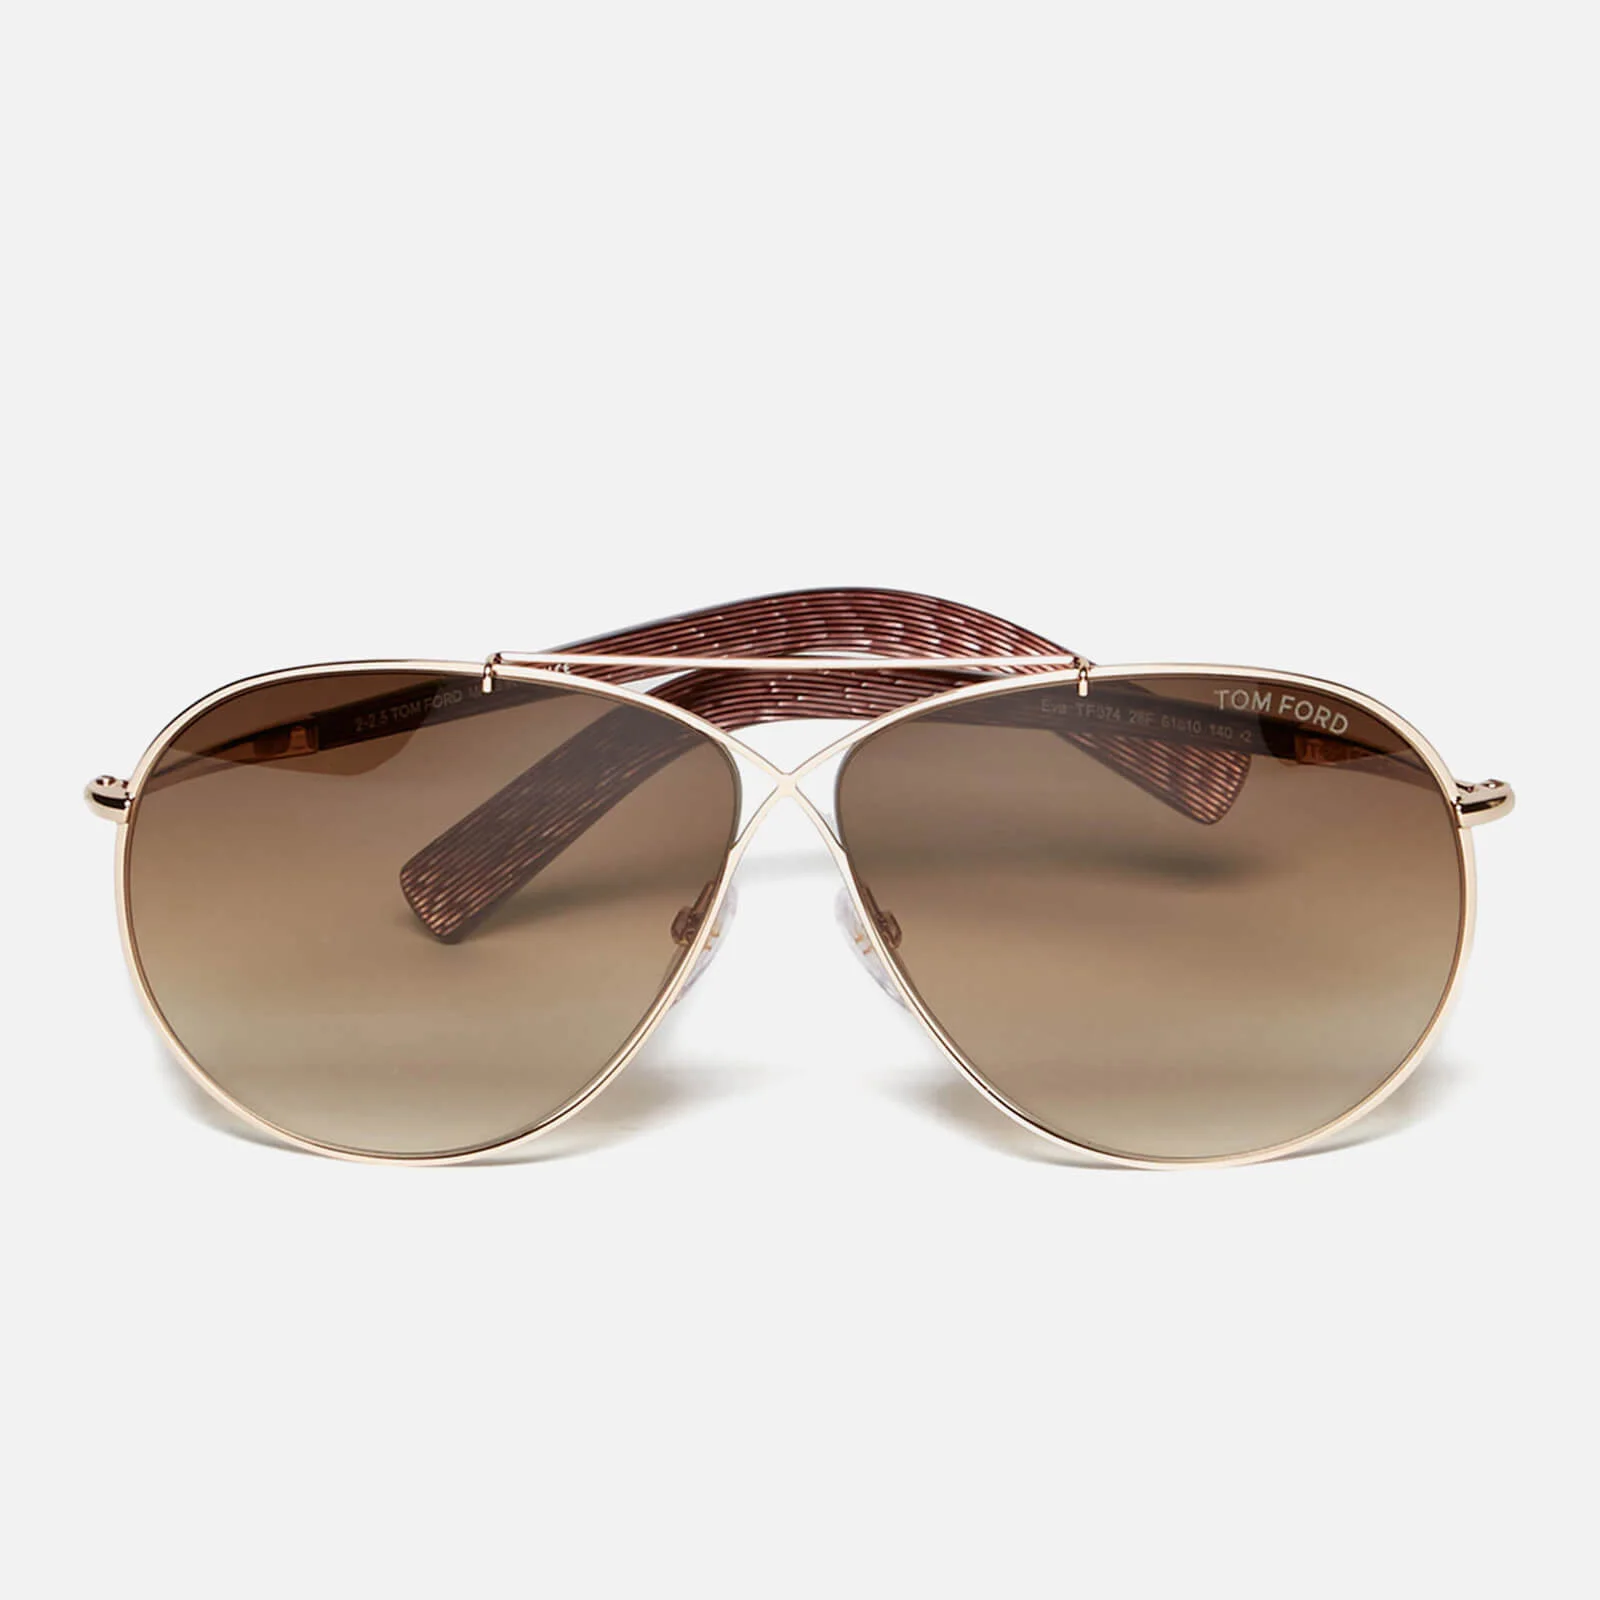 Tom Ford Women's Eva Sunglasses - Brown Image 1